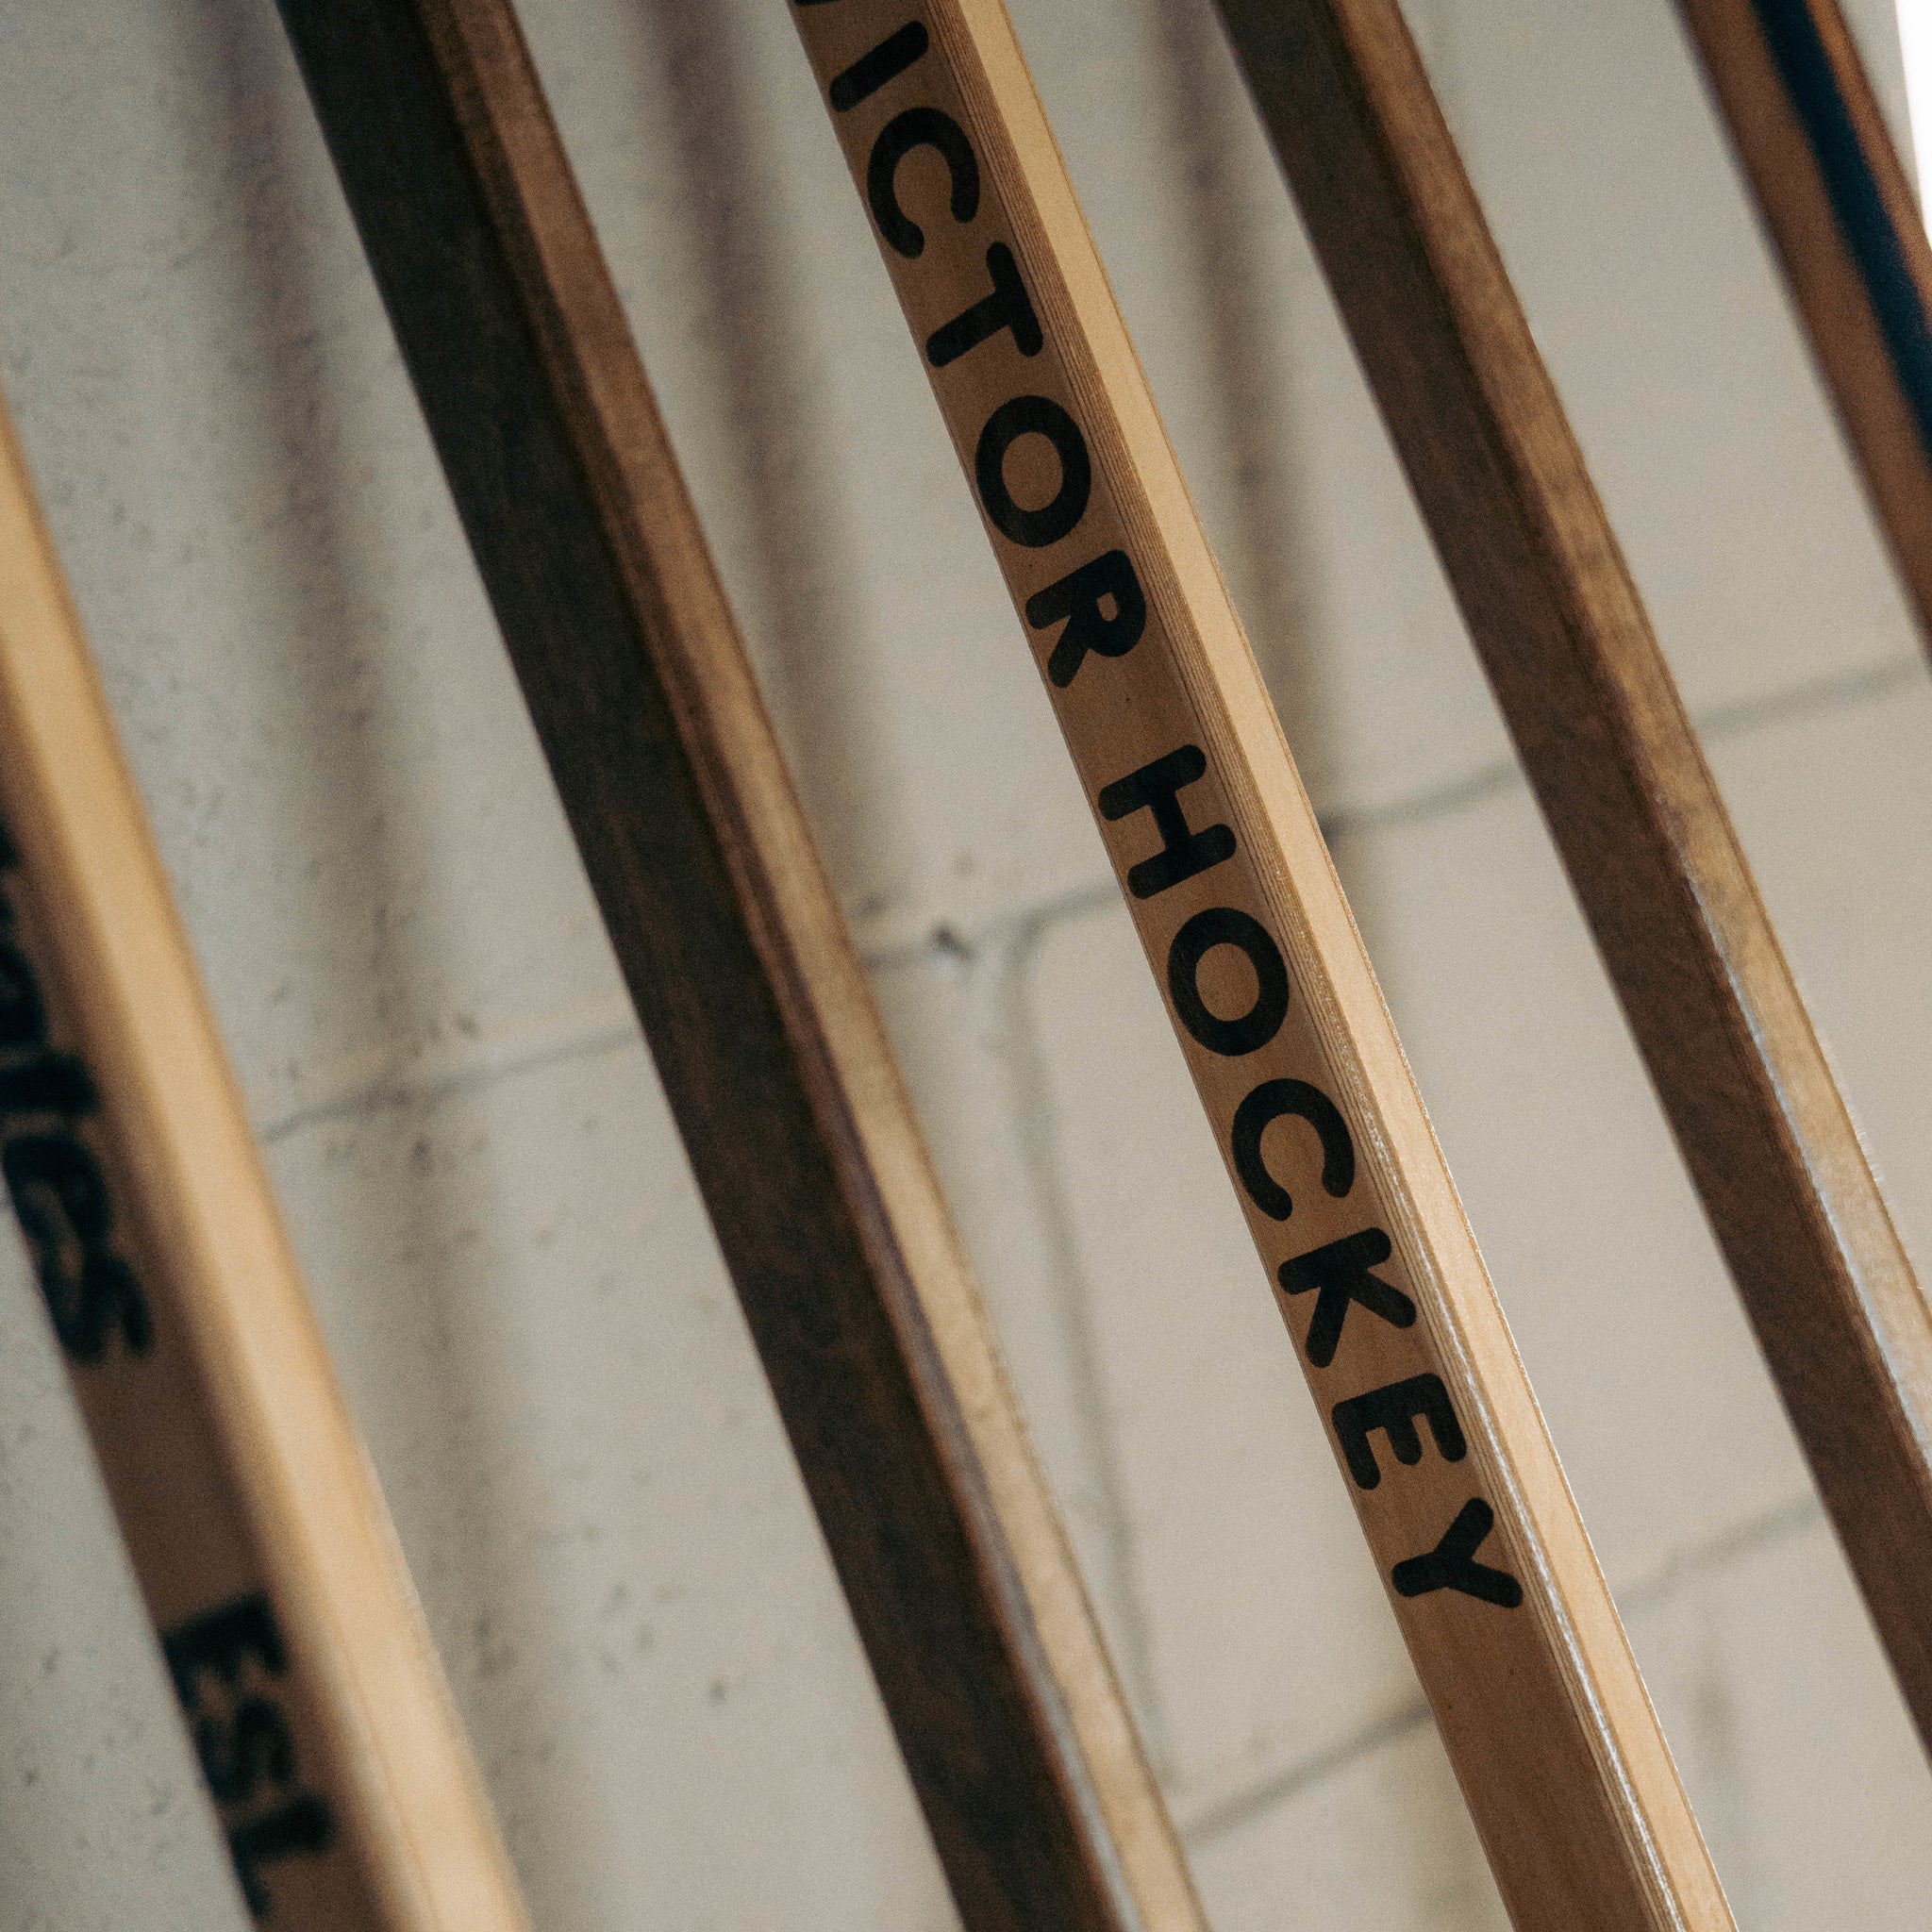 The Last Generation' Wood Hockey Sticks